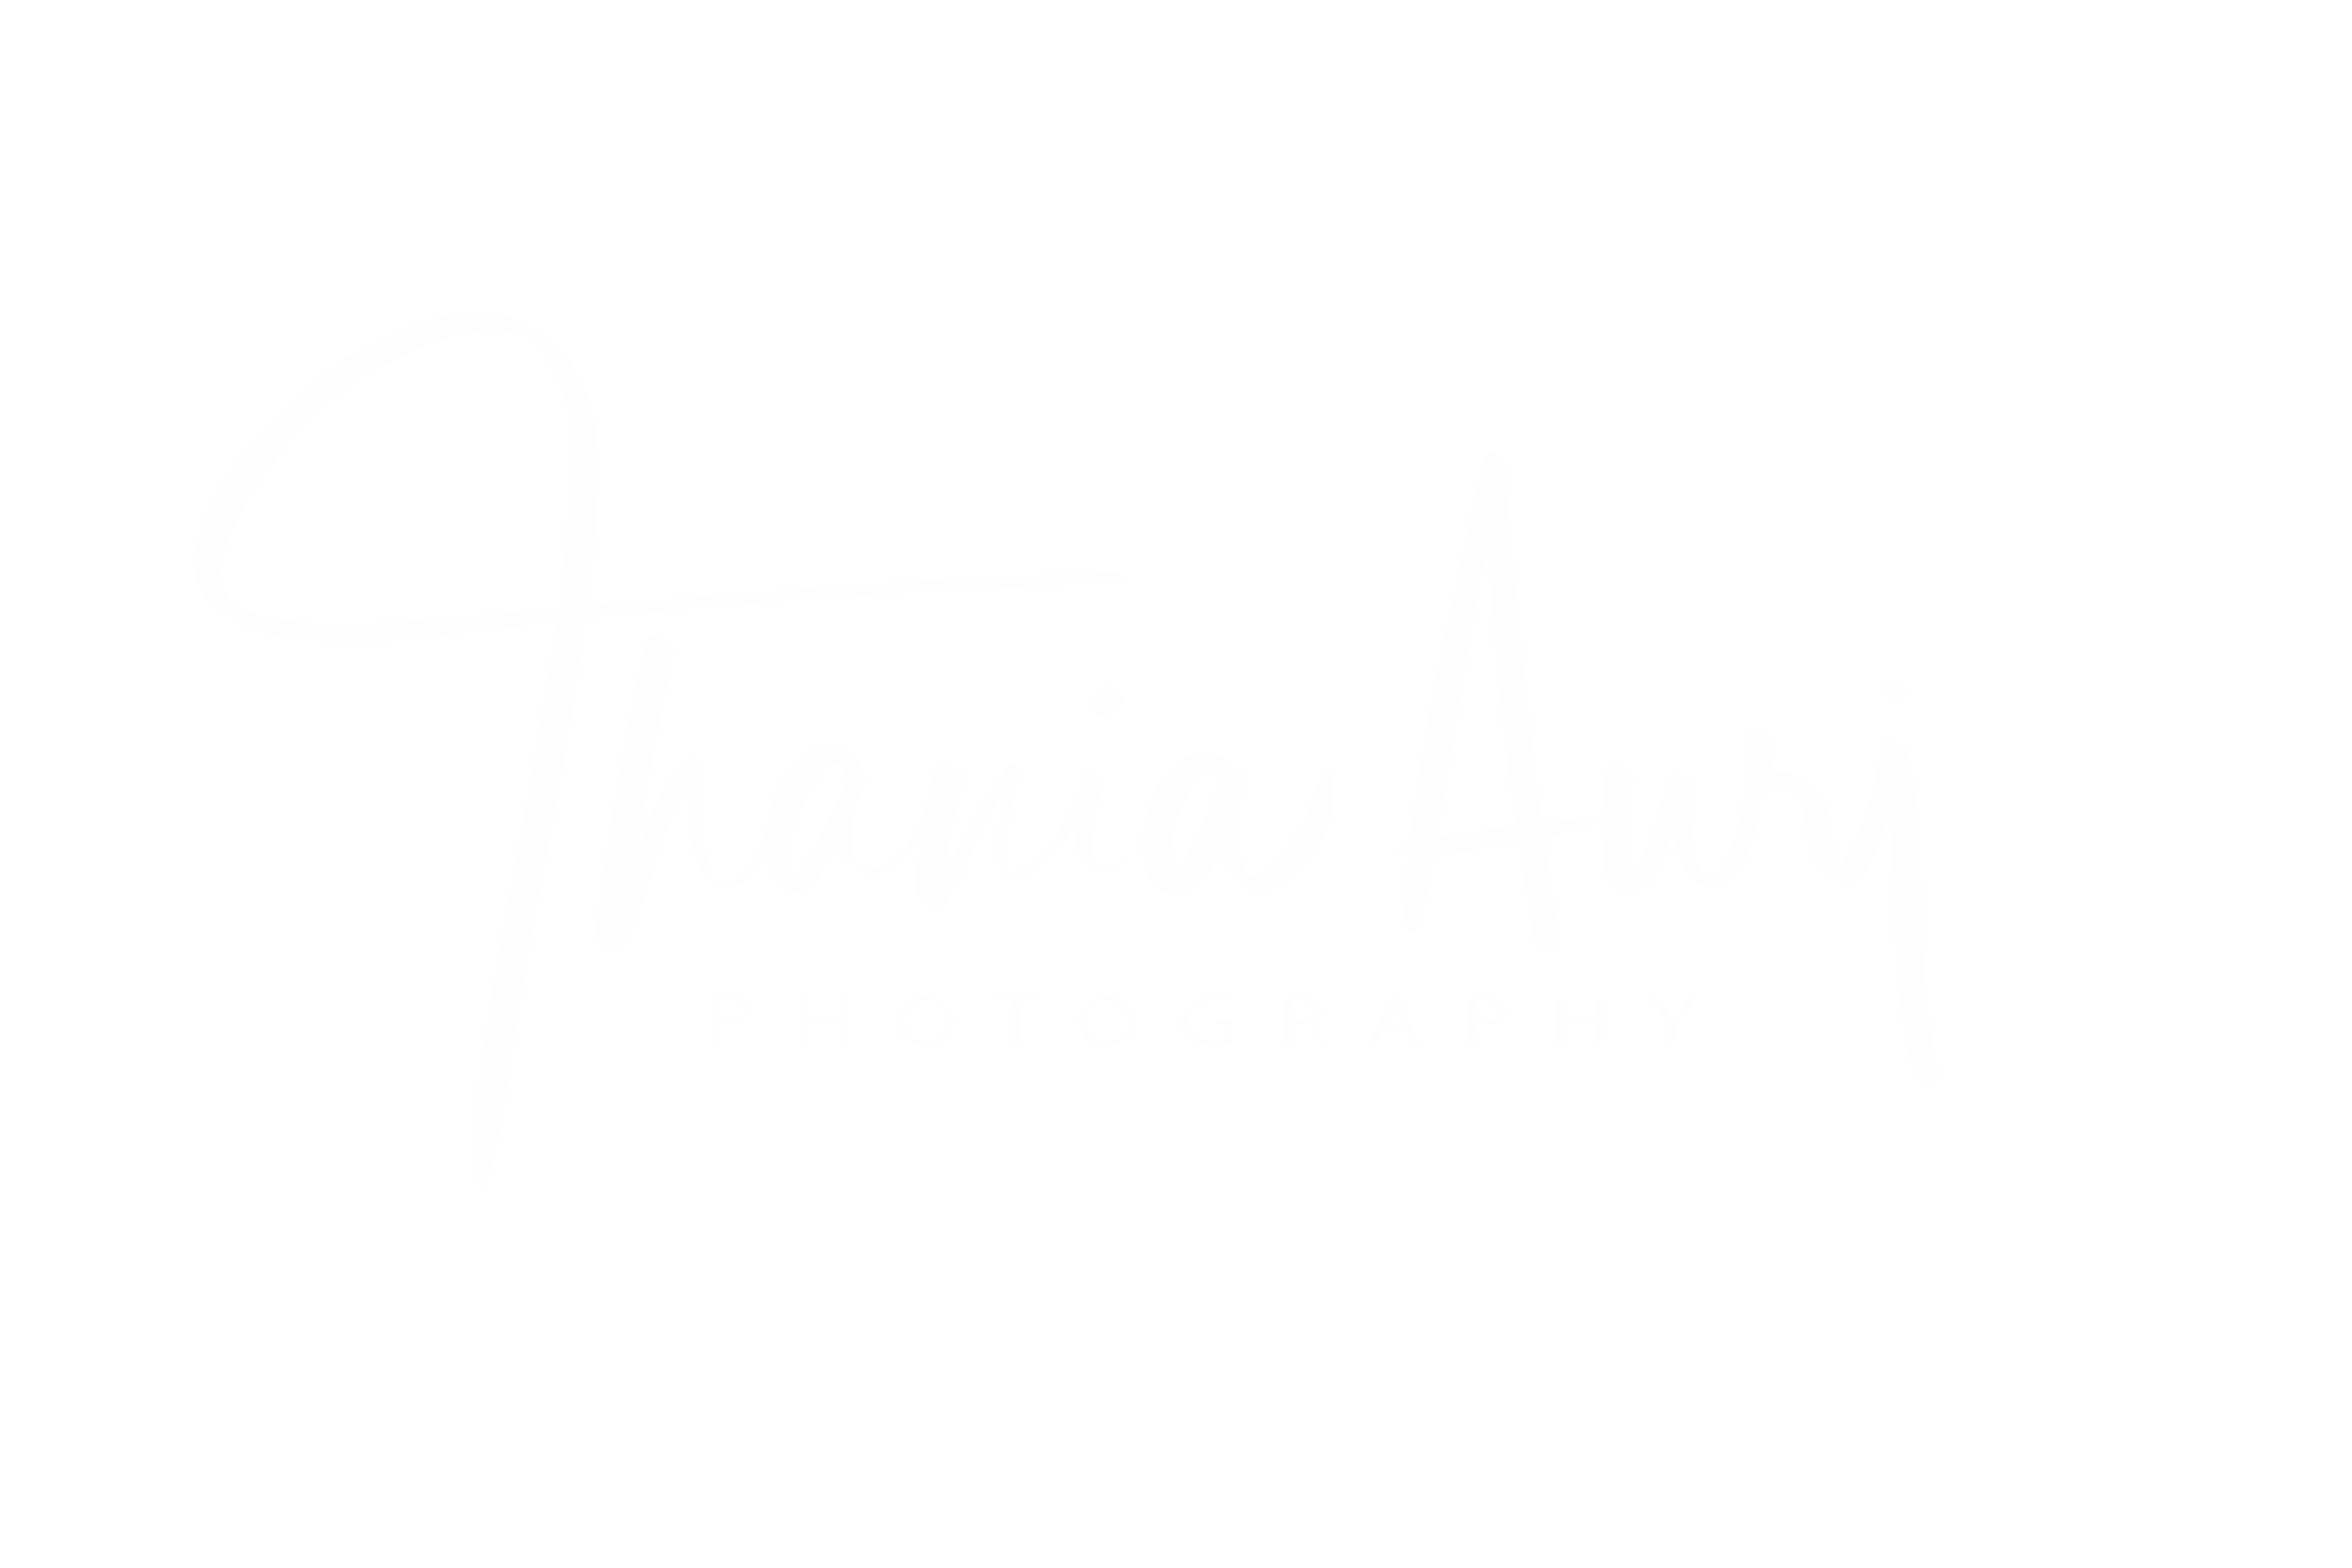 Thania Auri Photography logo, destination wedding photographer based out of Puerto Rico